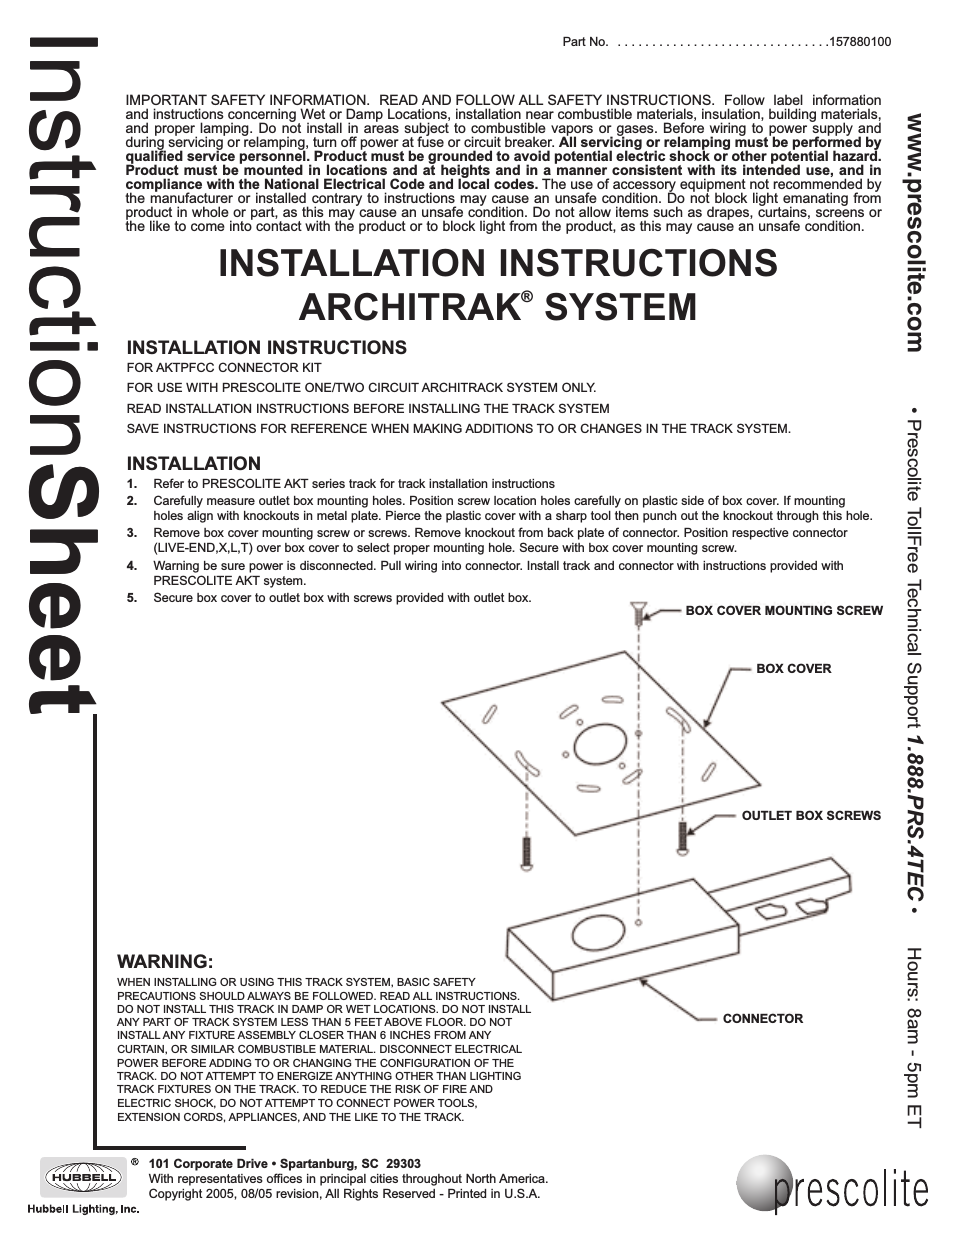 ARCHITRAK SYSTEM AKTPFCC - Outlet Box Cover Plate